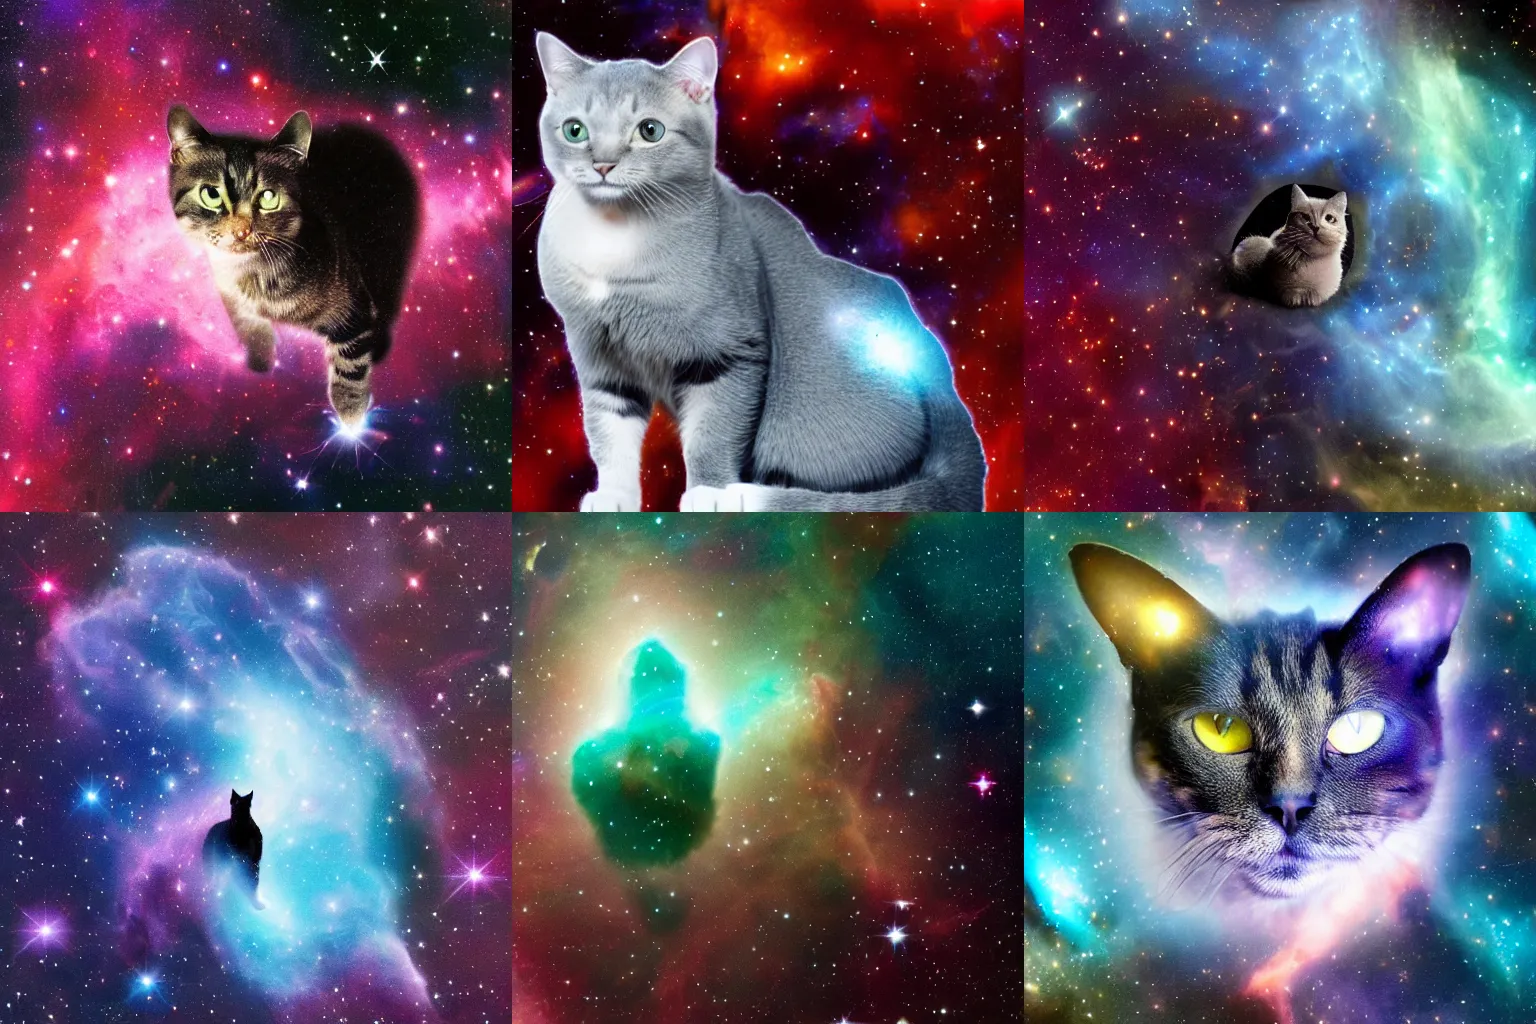 Prompt: a cat made of nebula in space